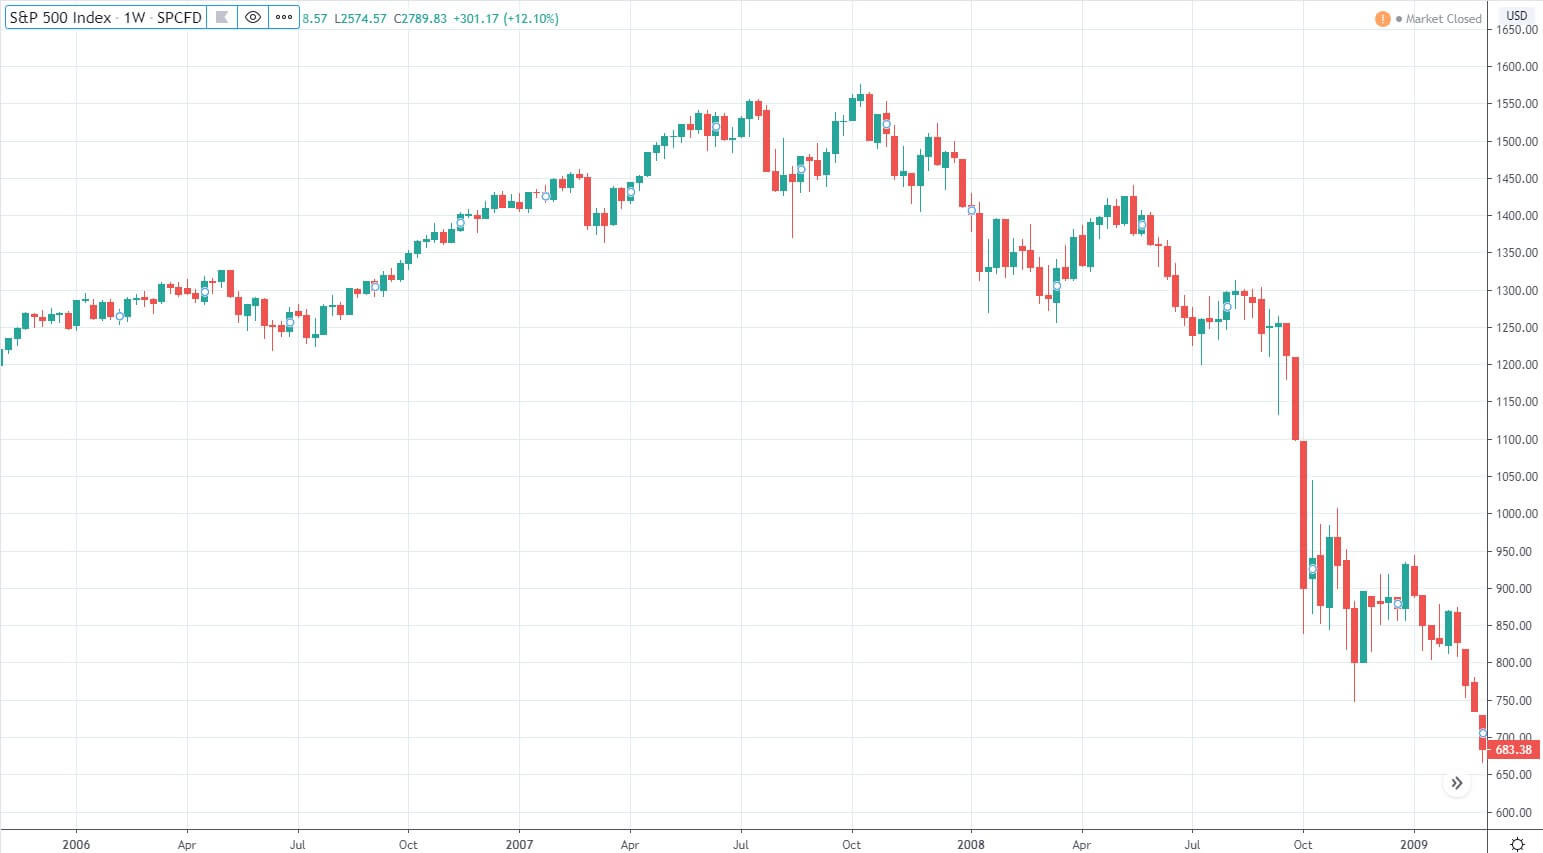 Fallende Aktienkurse während der Finanzkrise (Quelle www.tradingview.com)